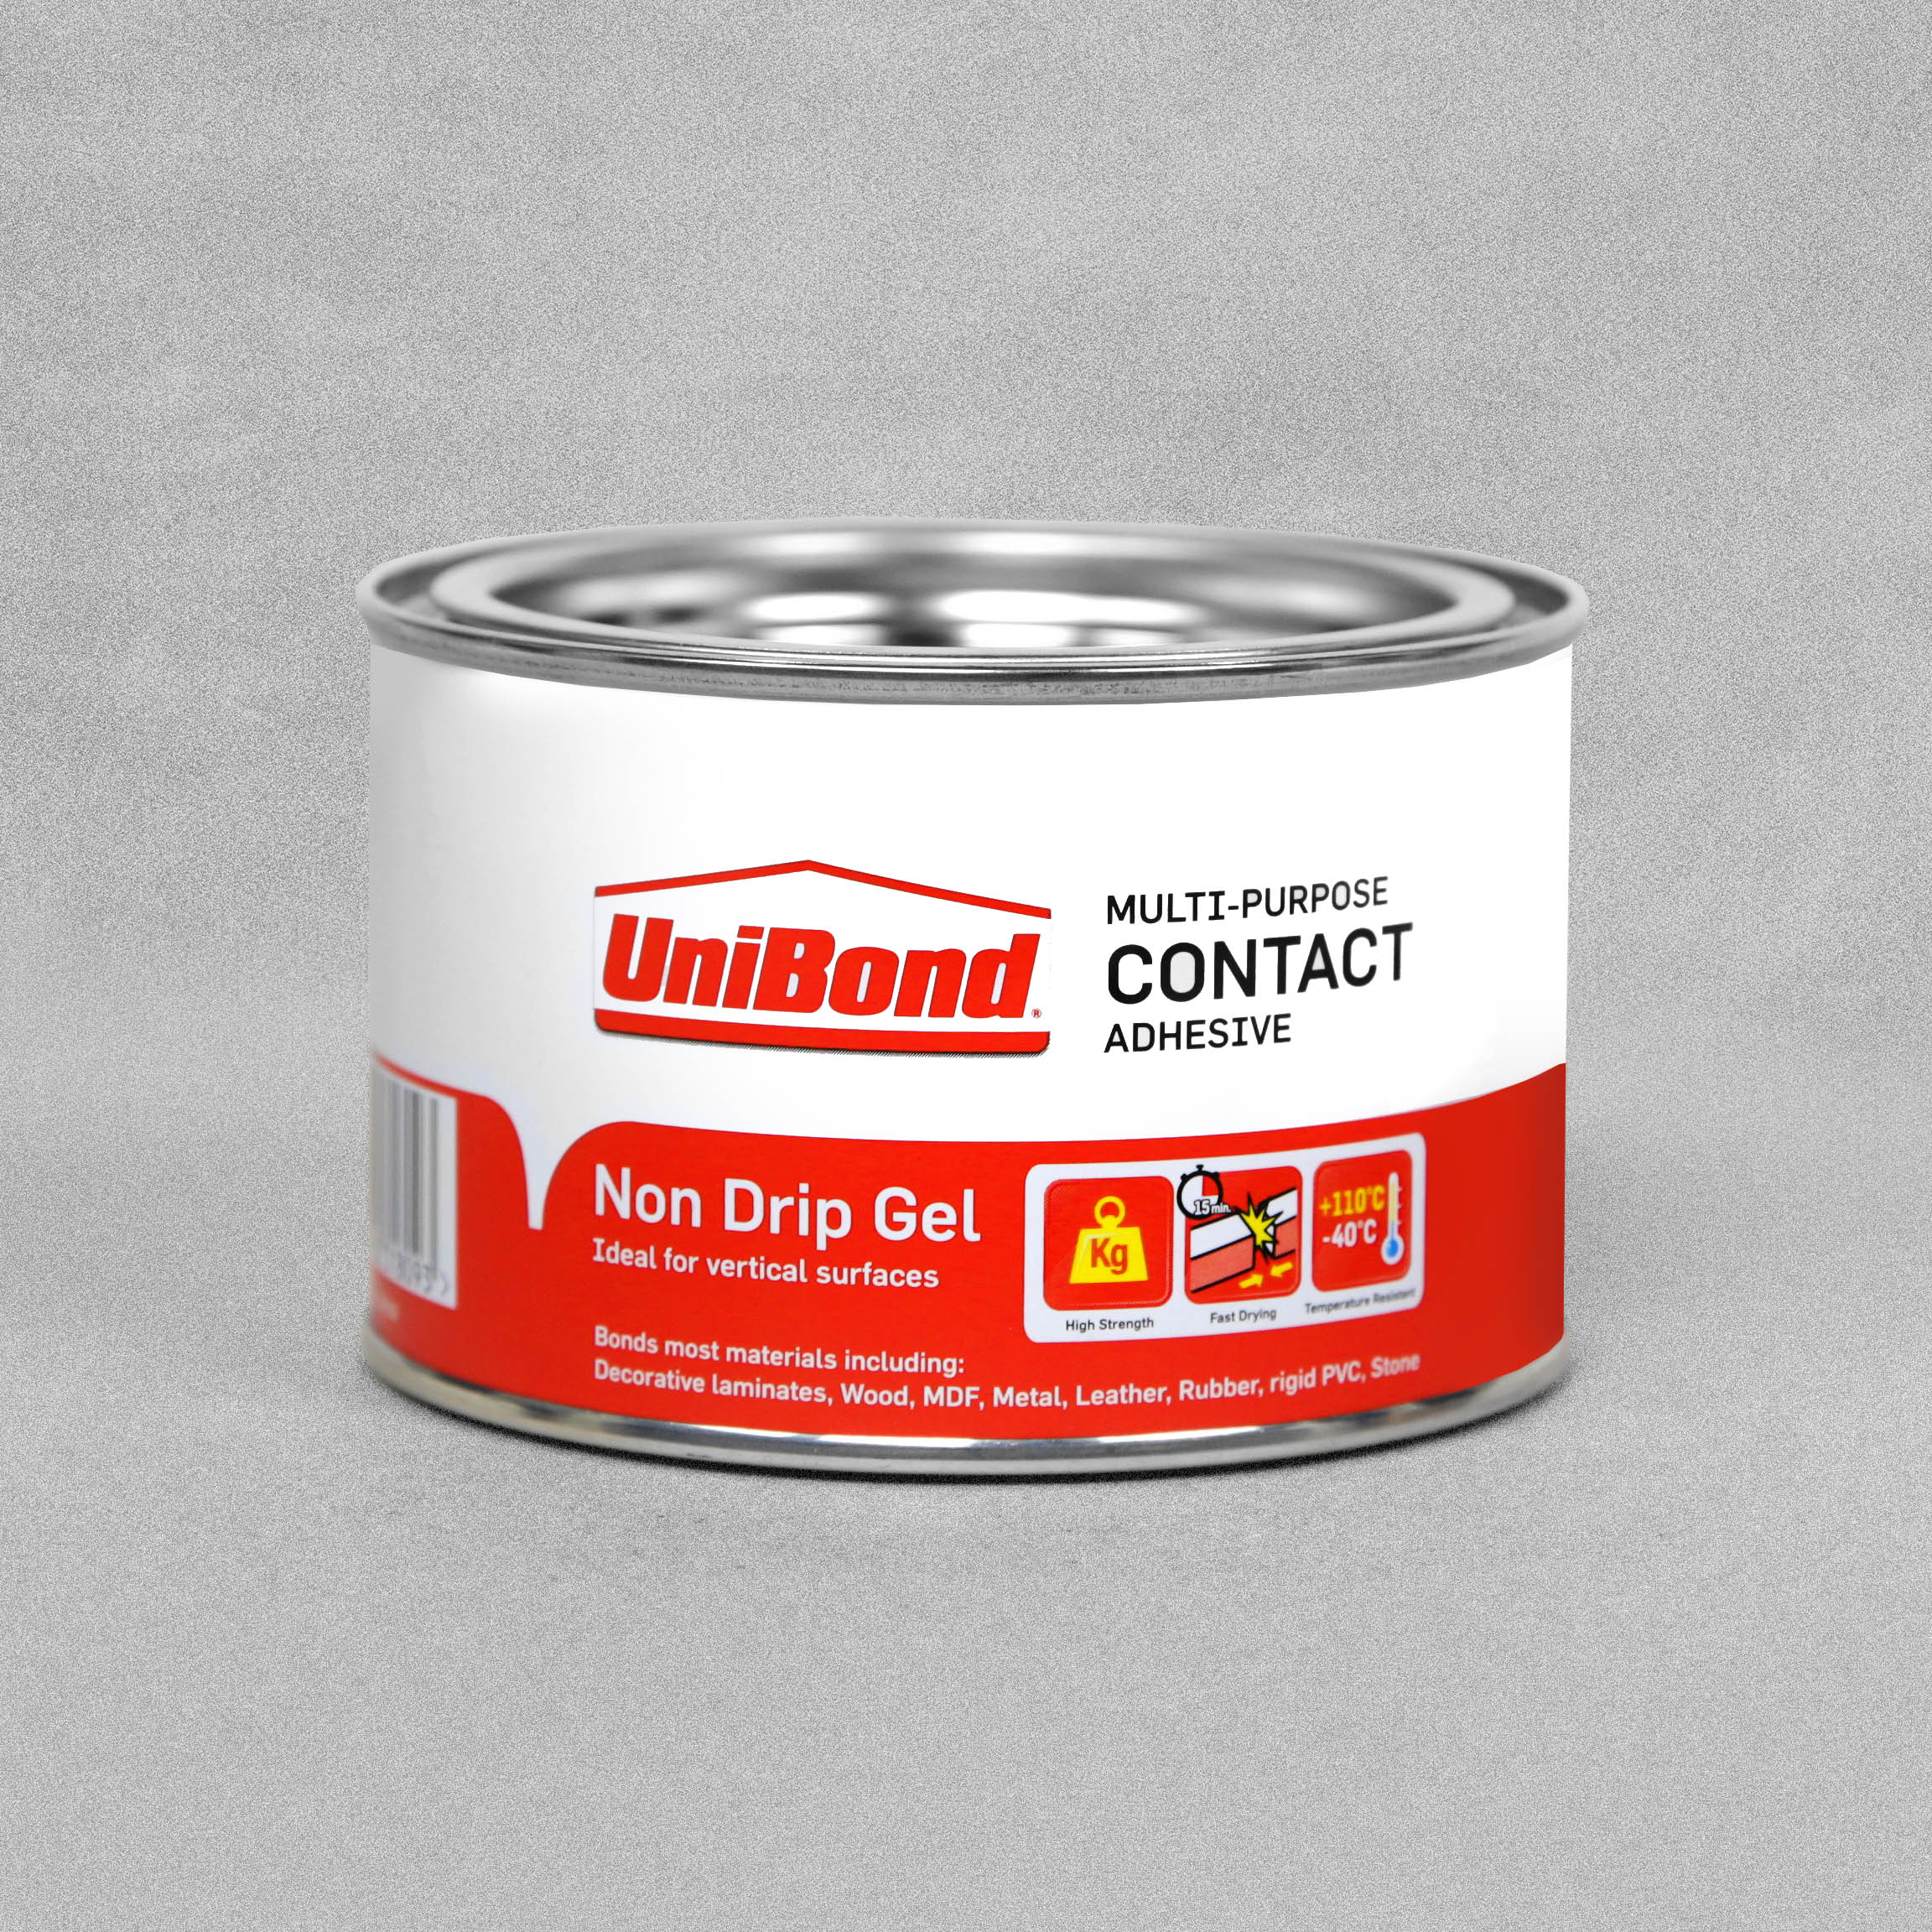 UniBond Multi-Purpose Contact Adhesive Non Drip Gel - 300g